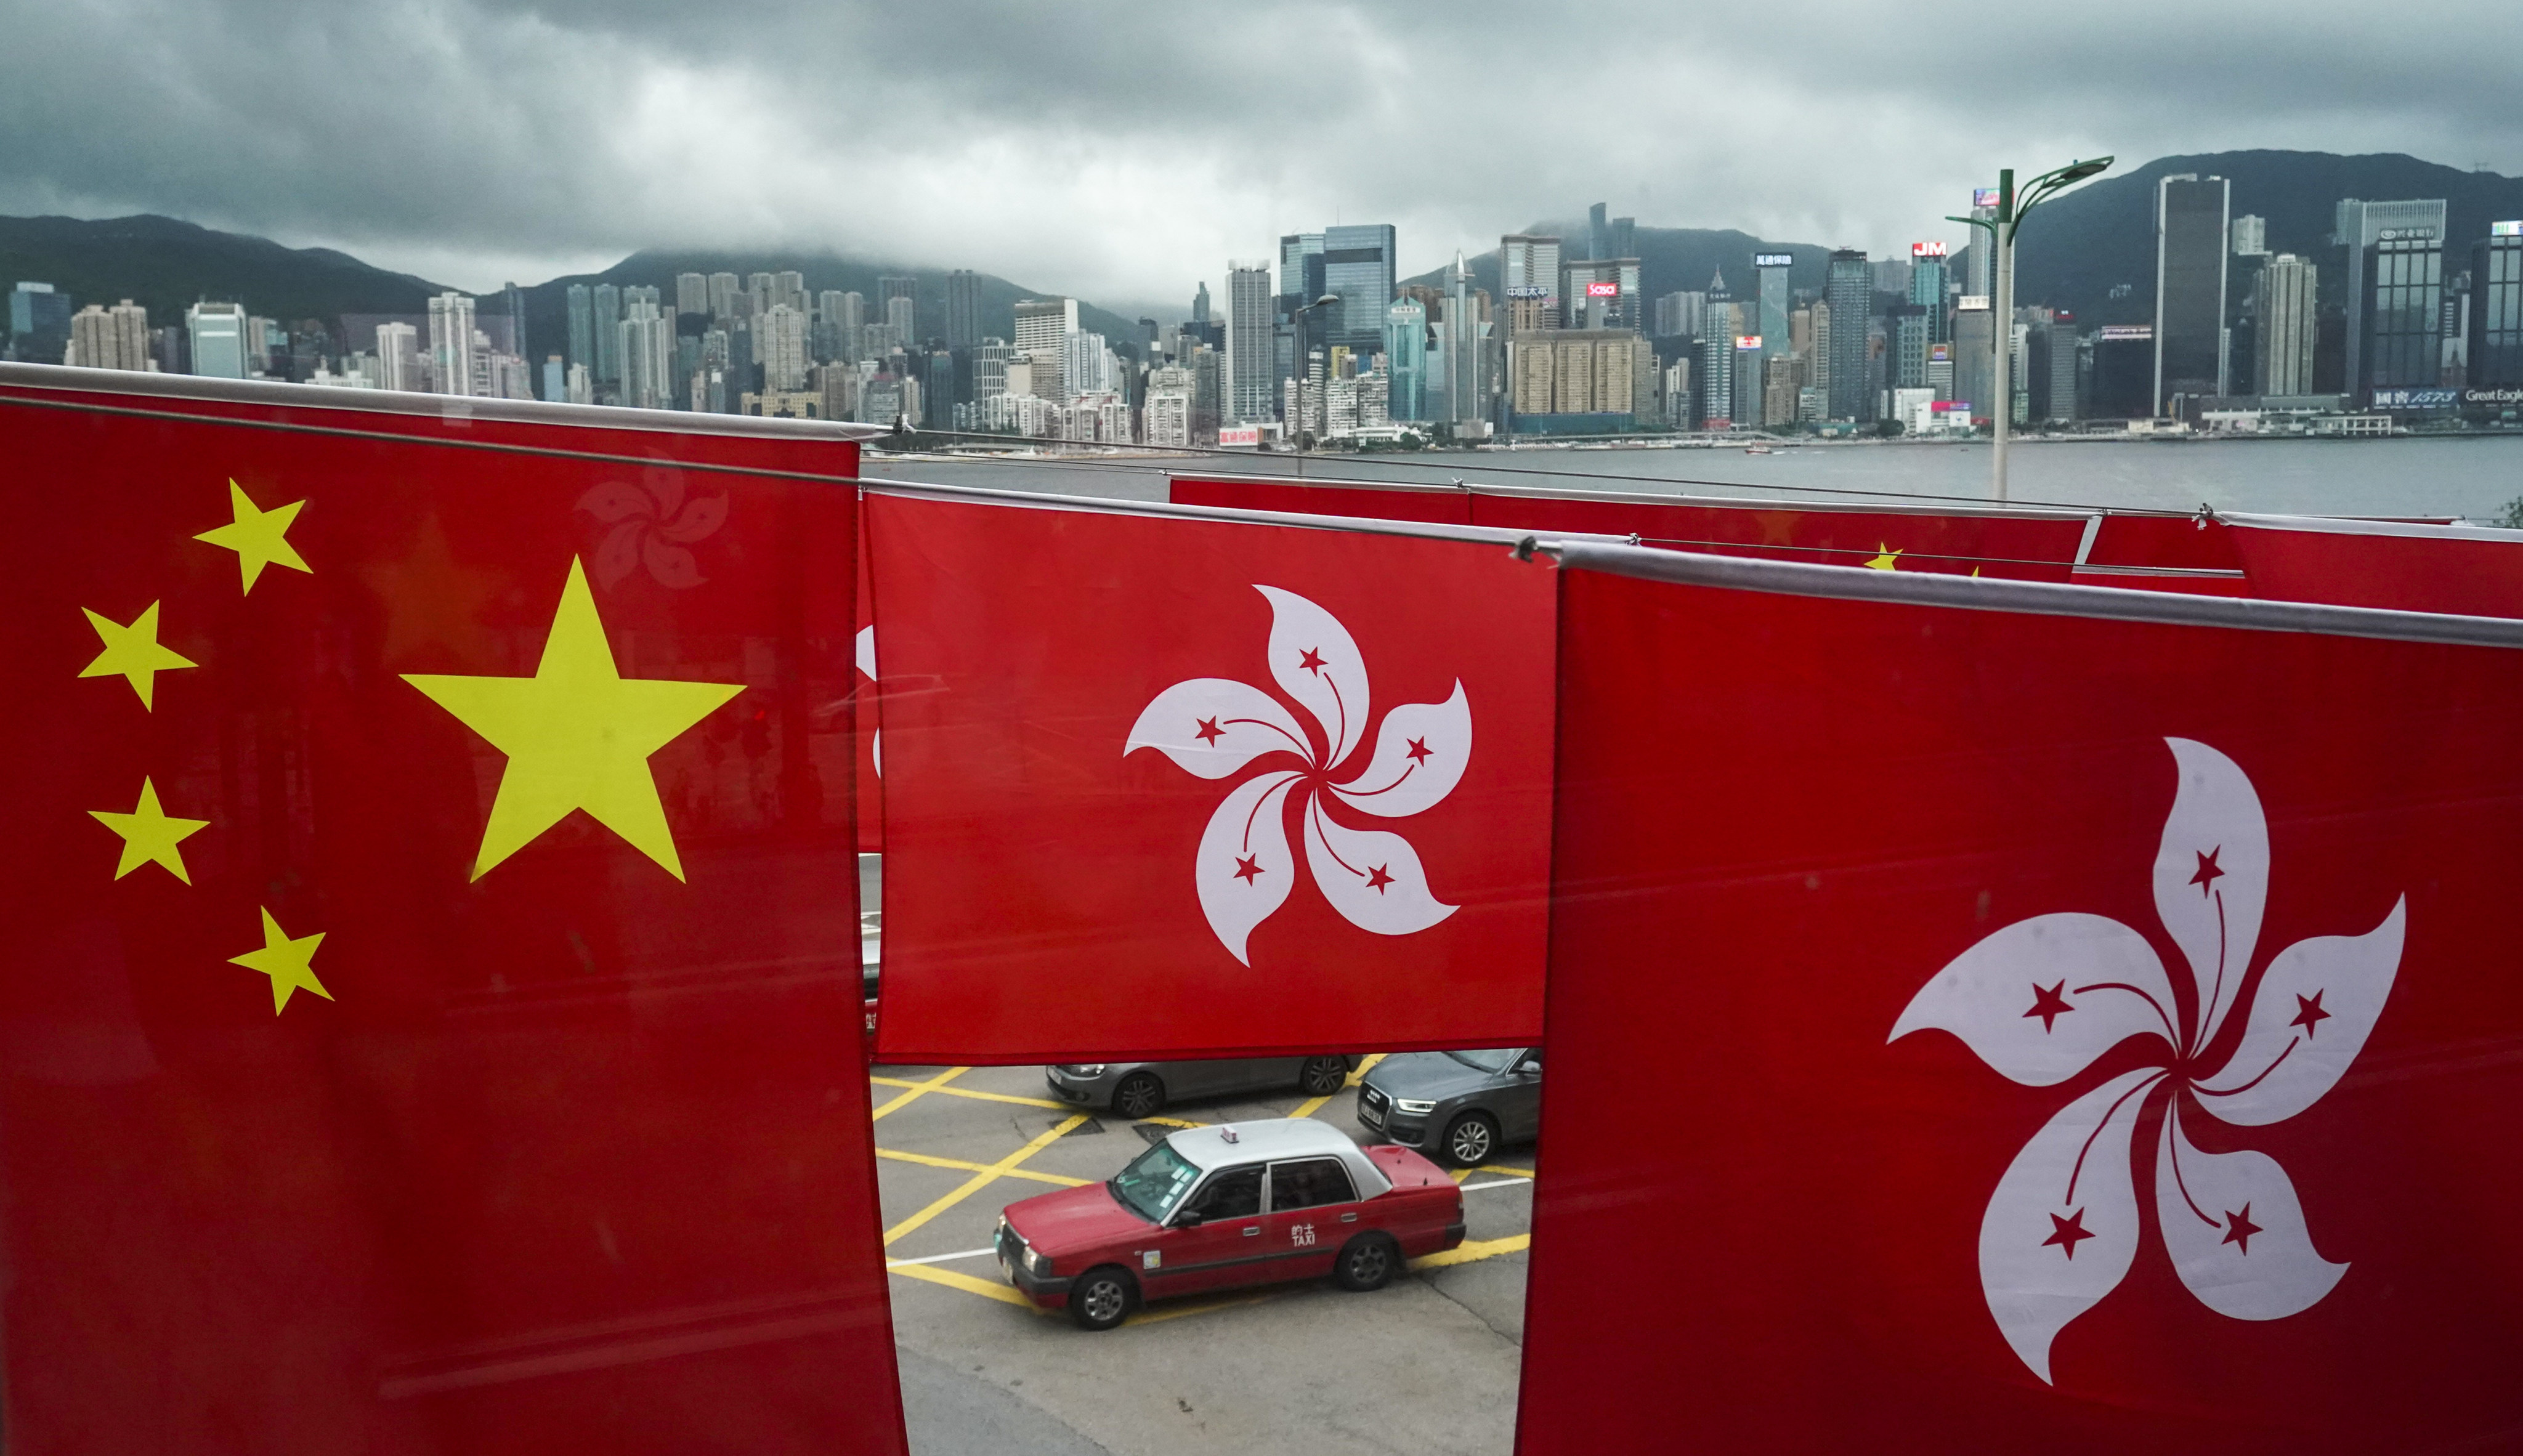 City and state flags hang over Tsim Sha Tsui in Hong Kong. Photo: Felix Wong